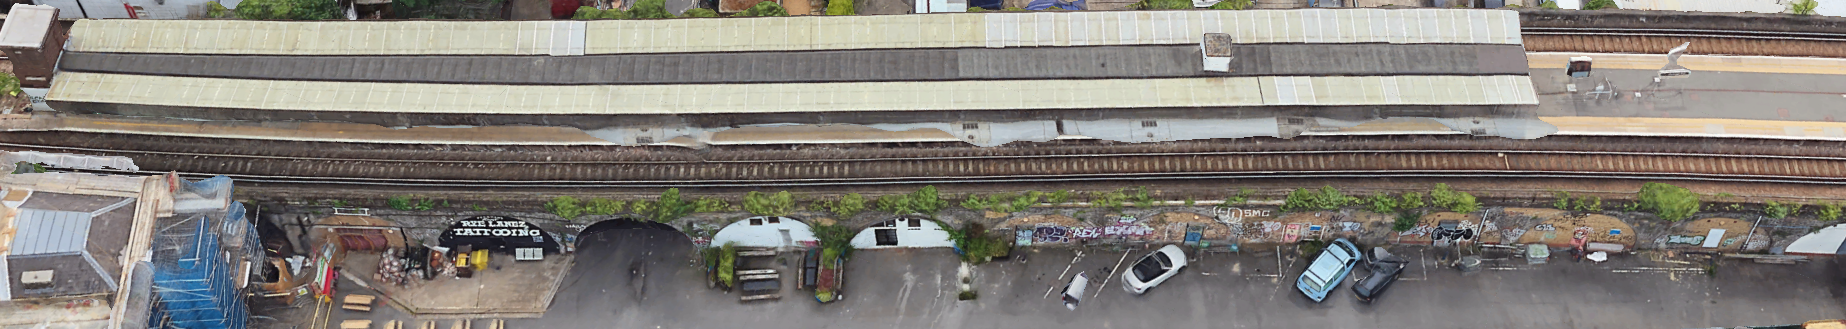 Google Maps view of Peckham Rye Station